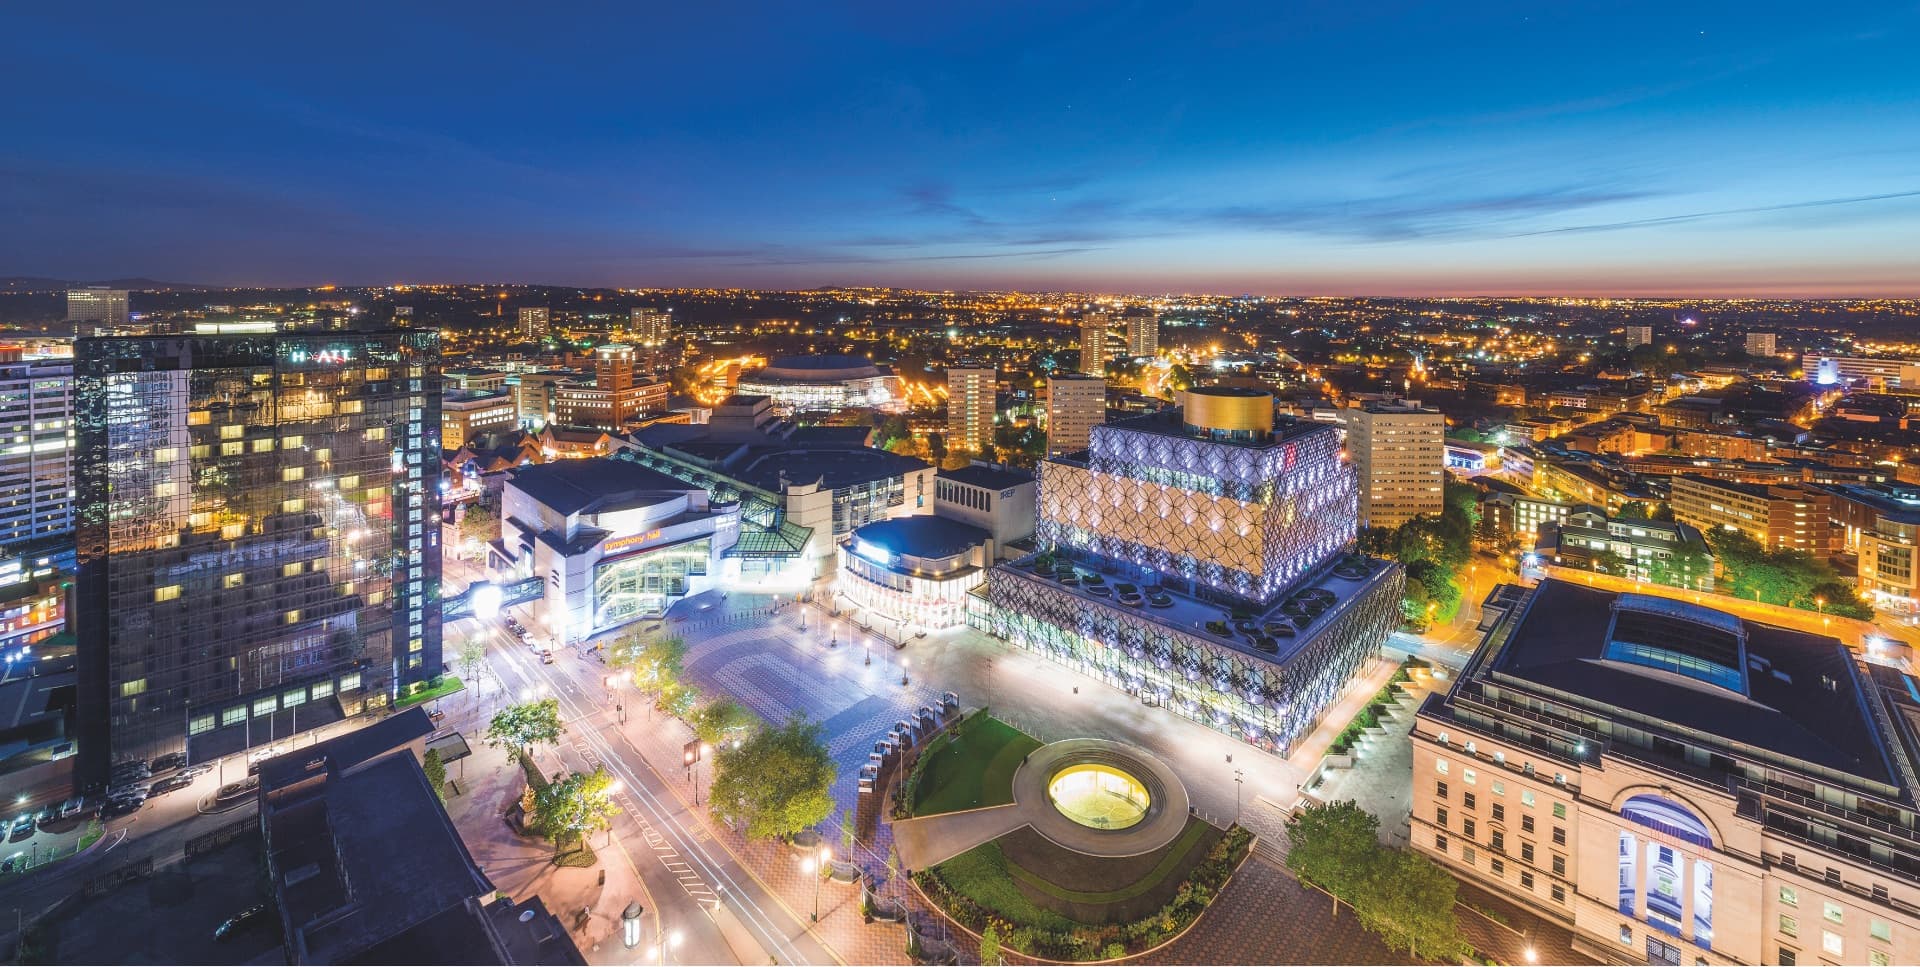 Aerial view of Centenary Square, Birmingham at night